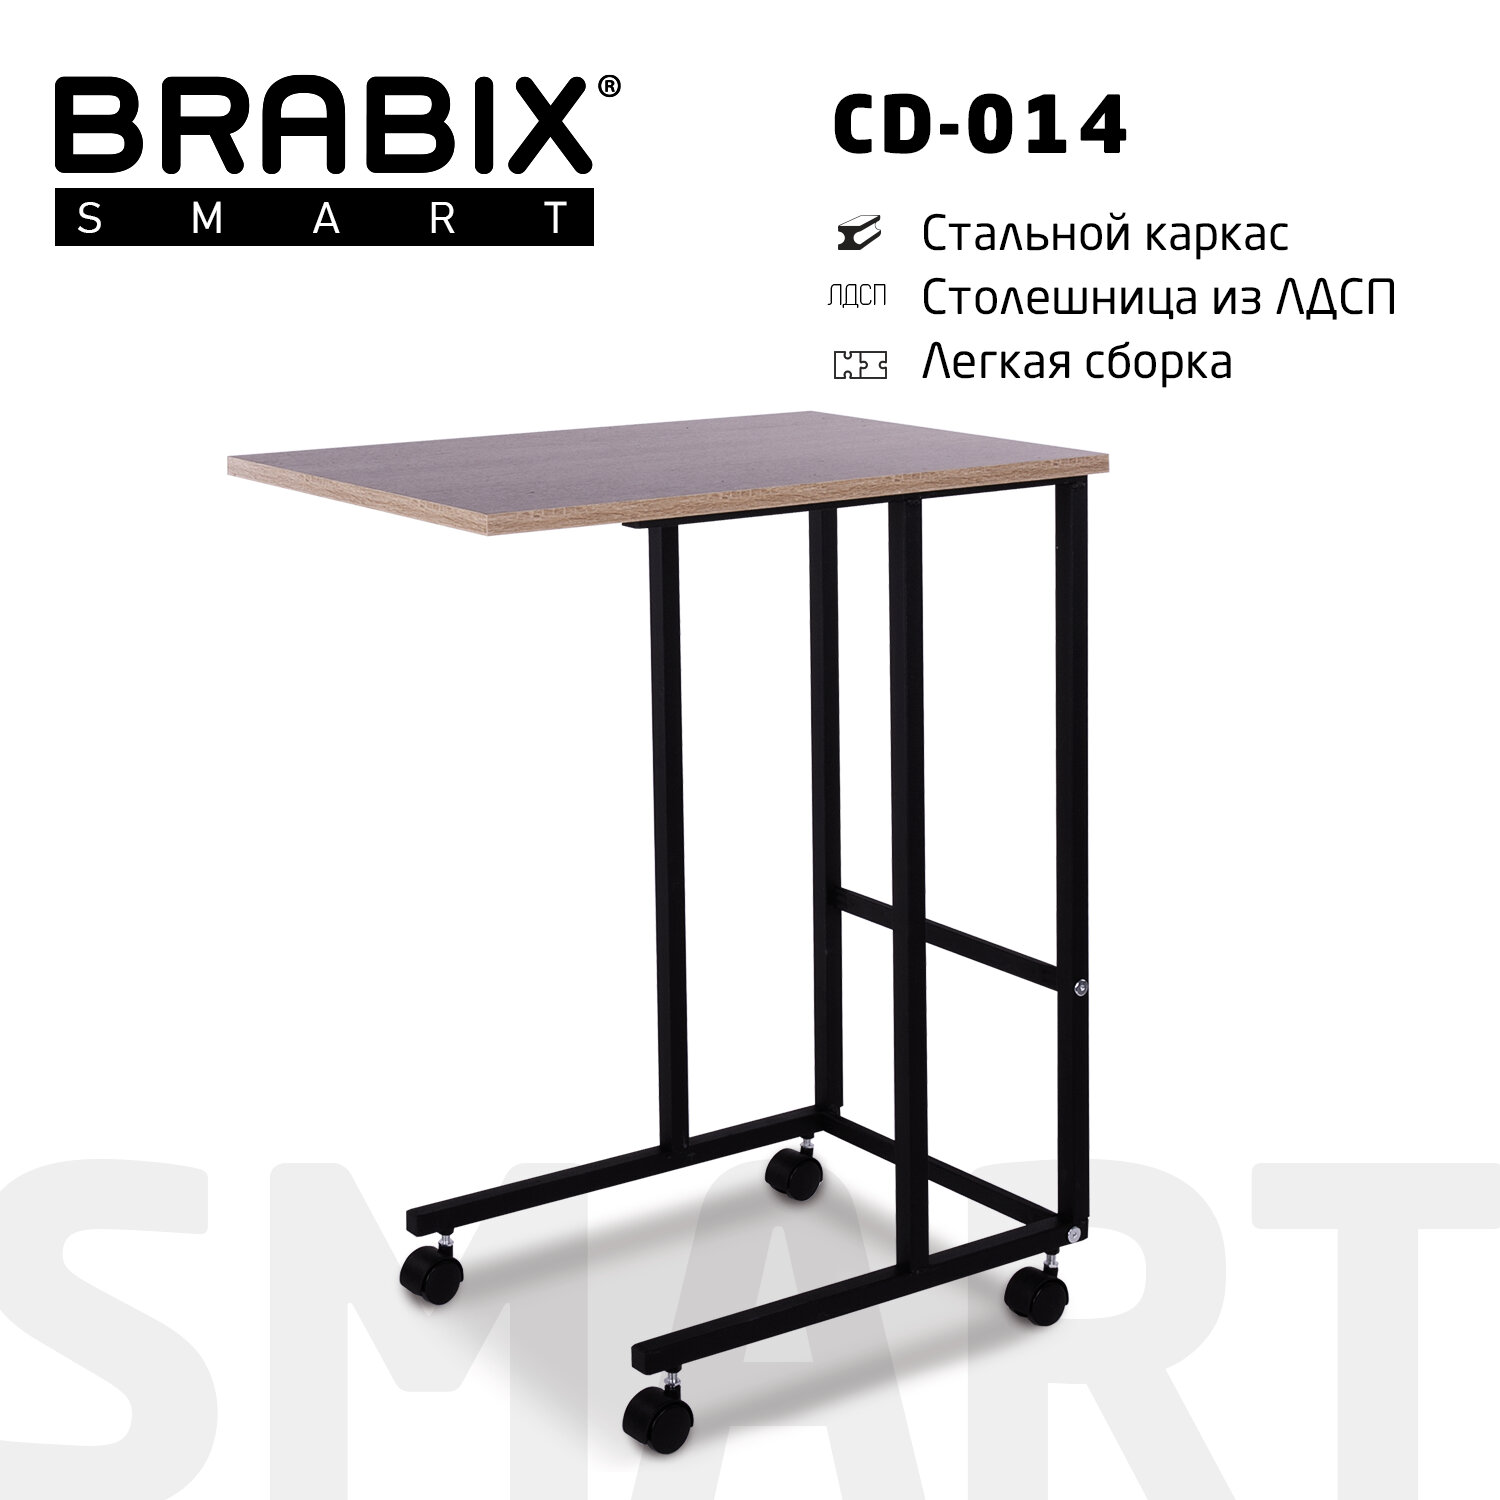  BRABIX Smart CD-014 641884